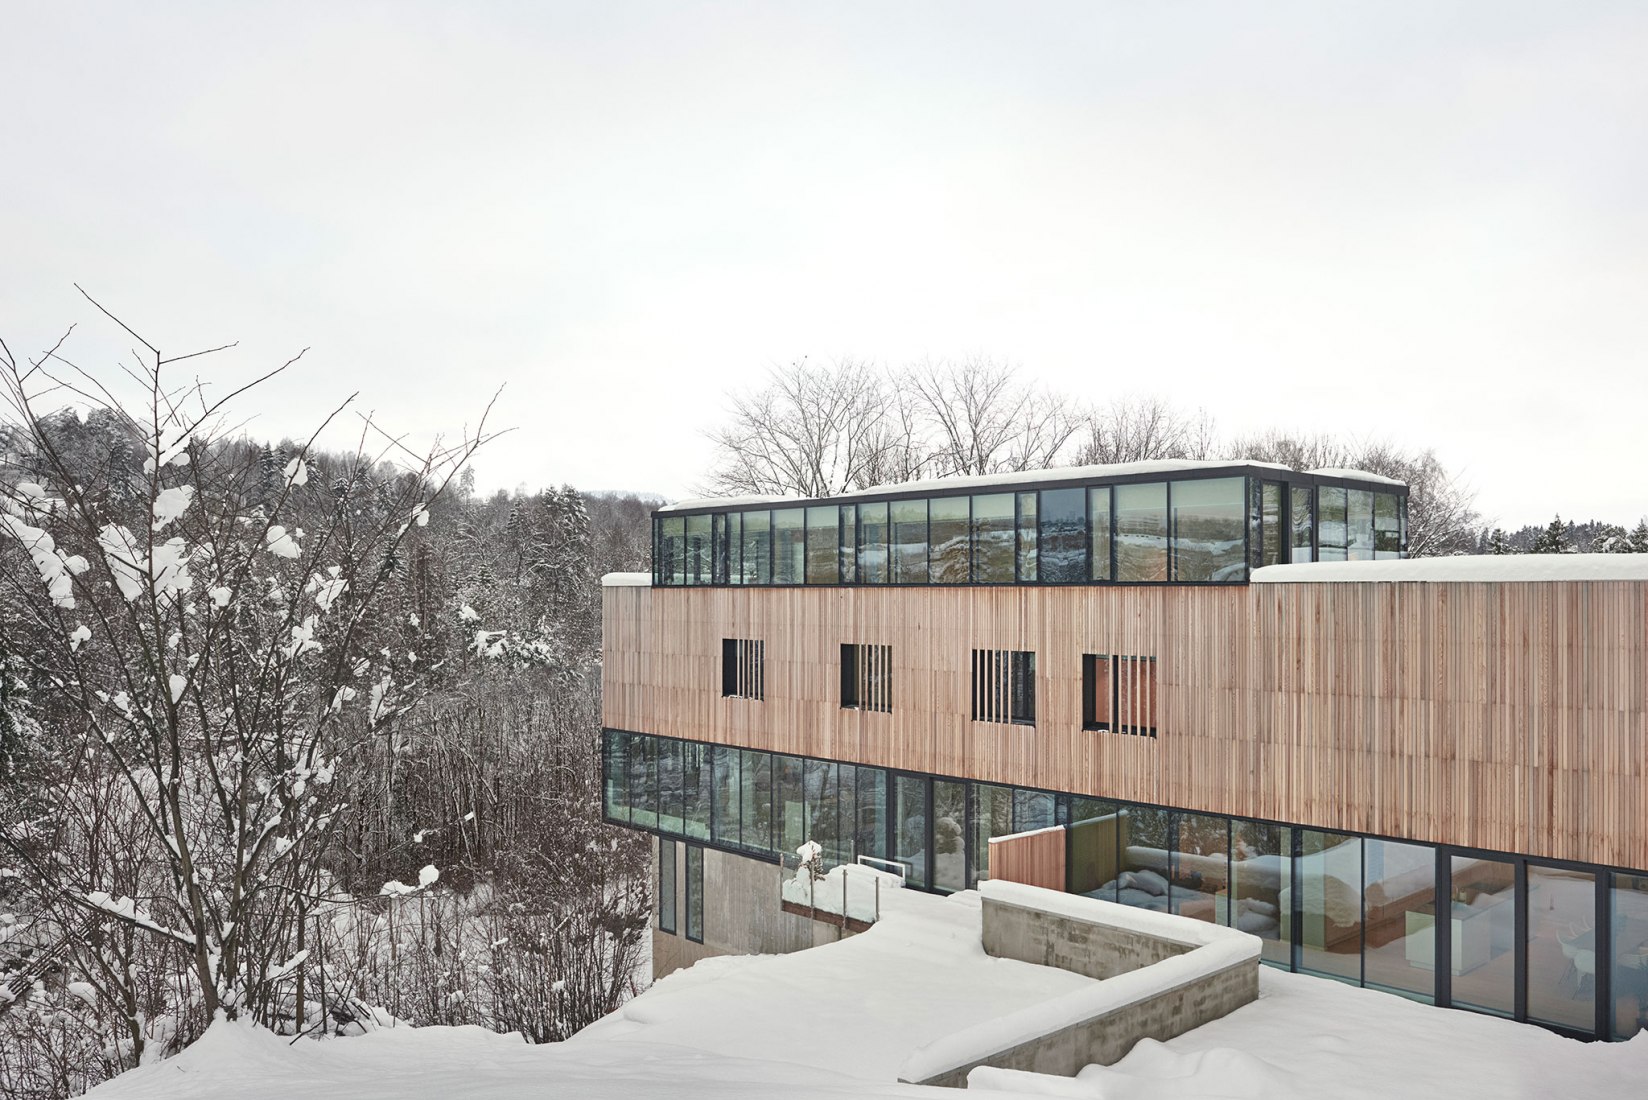 Vista exterior. Casa Two in One por Reiulf Ramstad Arkitekter. Fotografía por Ivar Kvaal